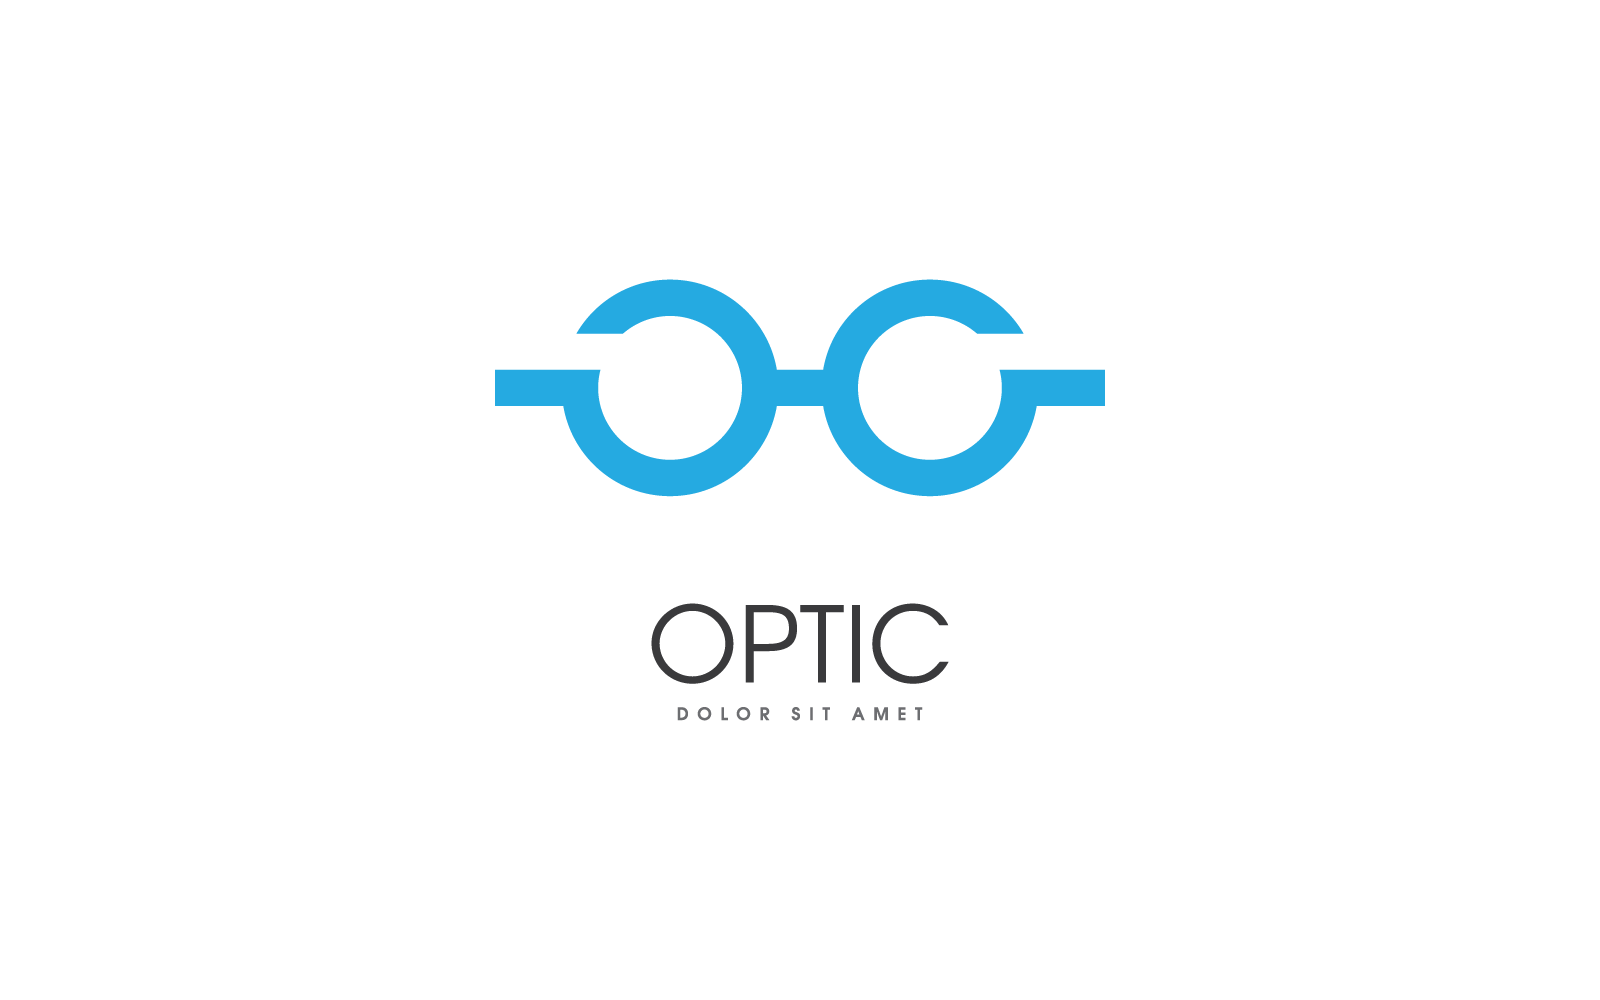 Optické logo ilustrace vektorové plochý design